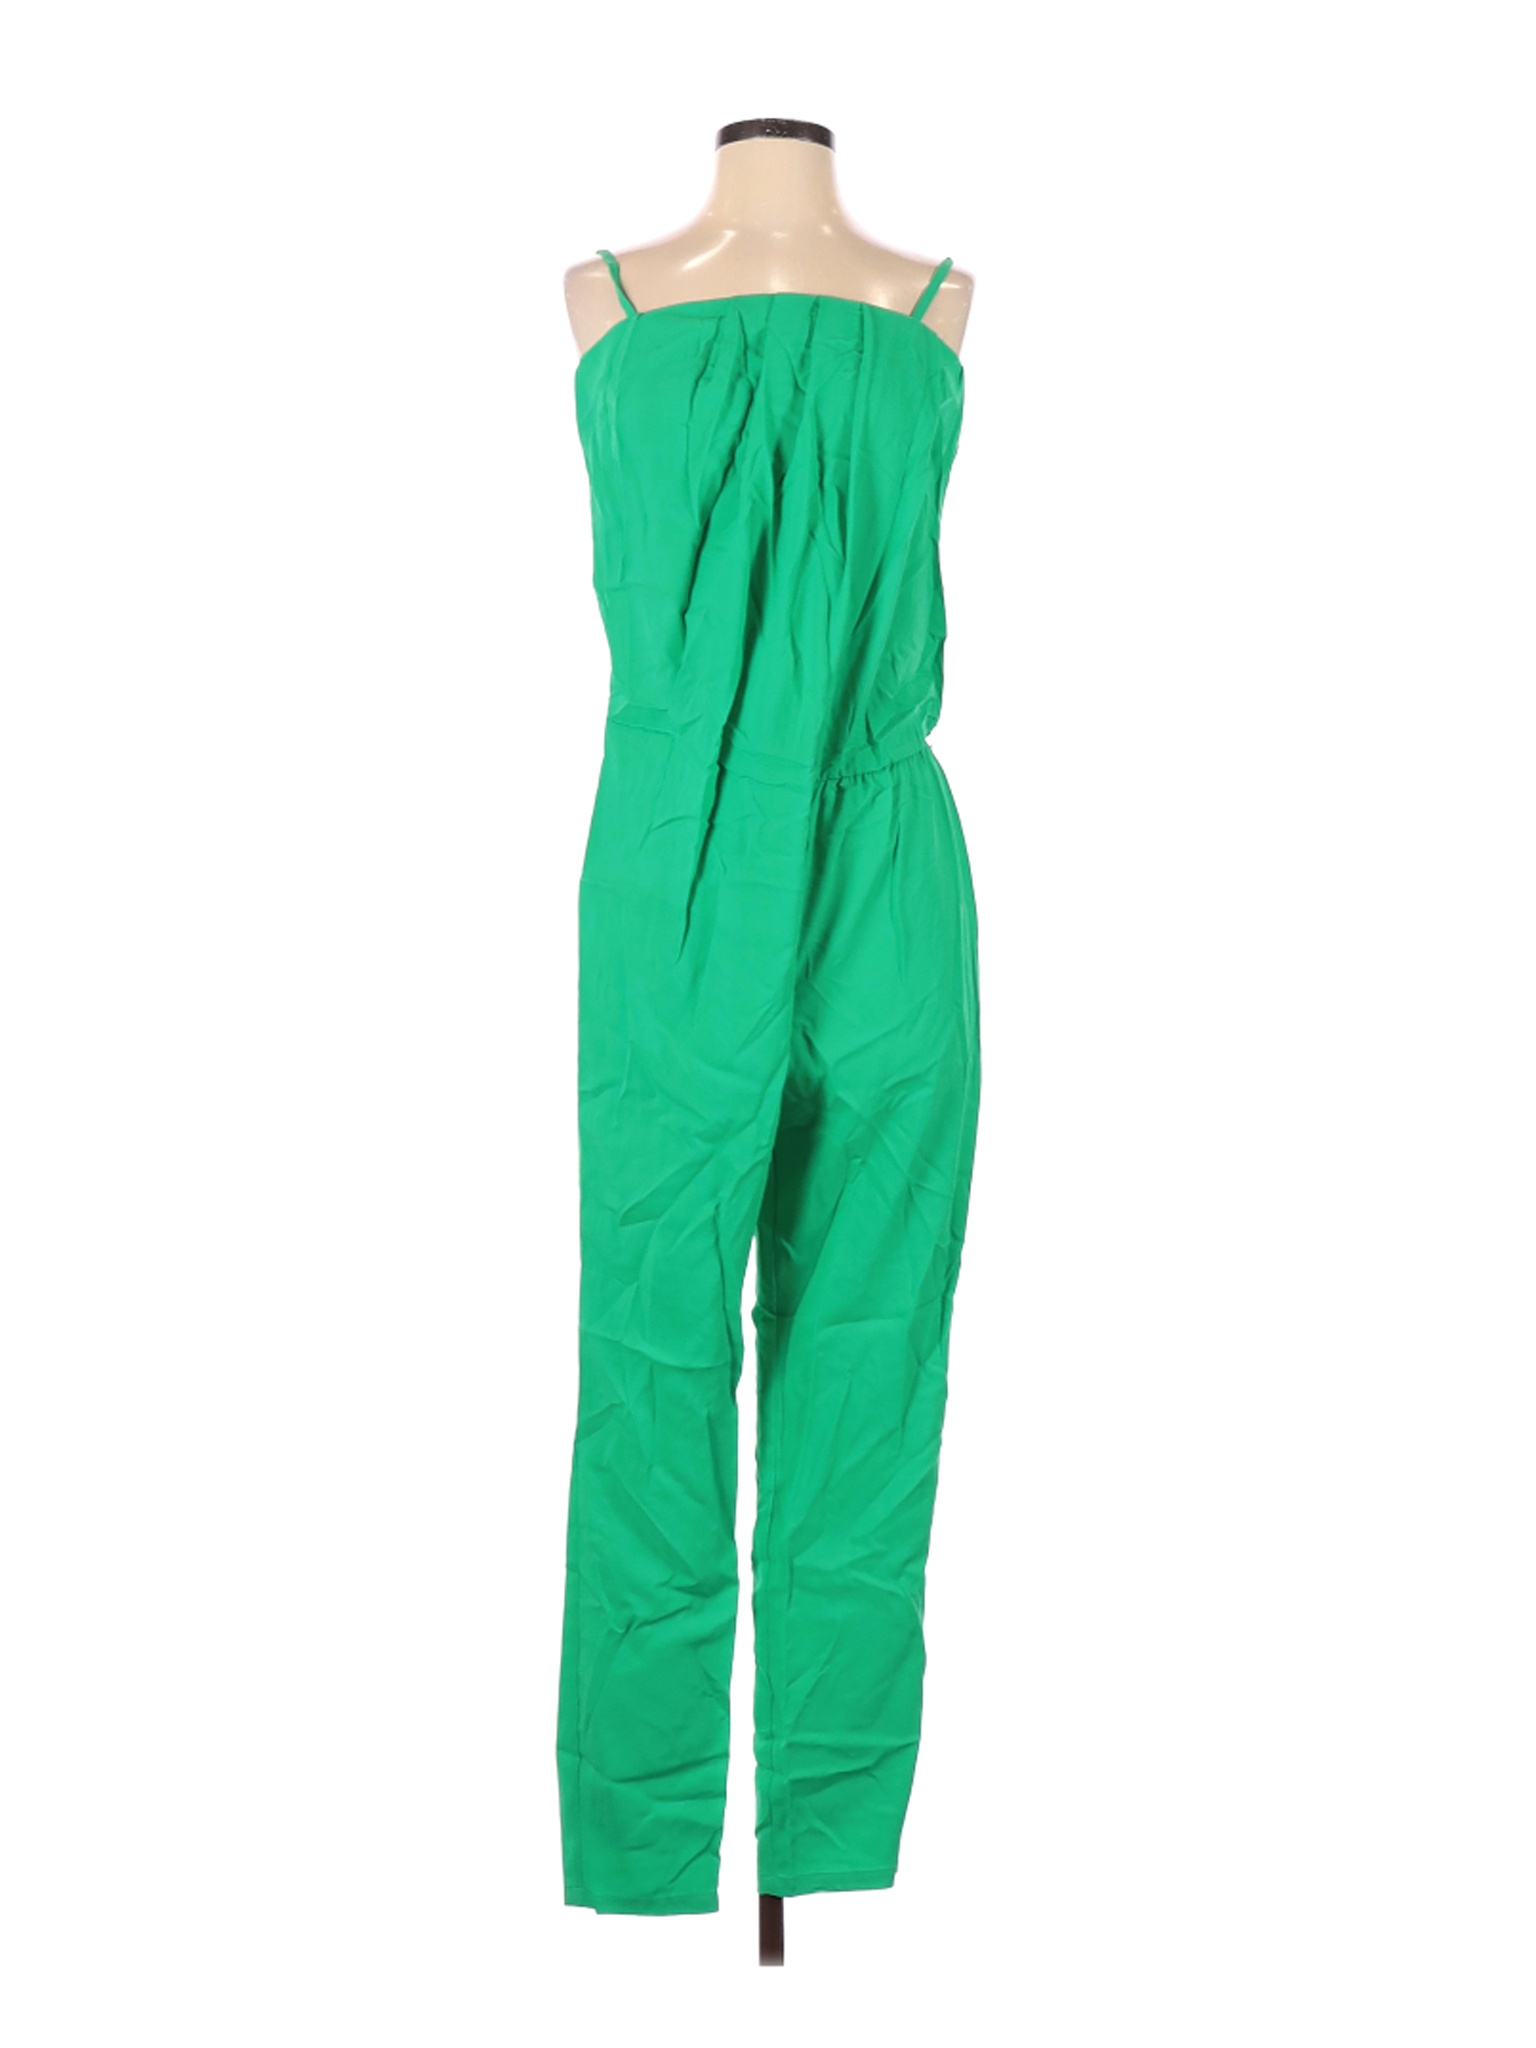 NWT Vero Moda Women Green Jumpsuit M | eBay